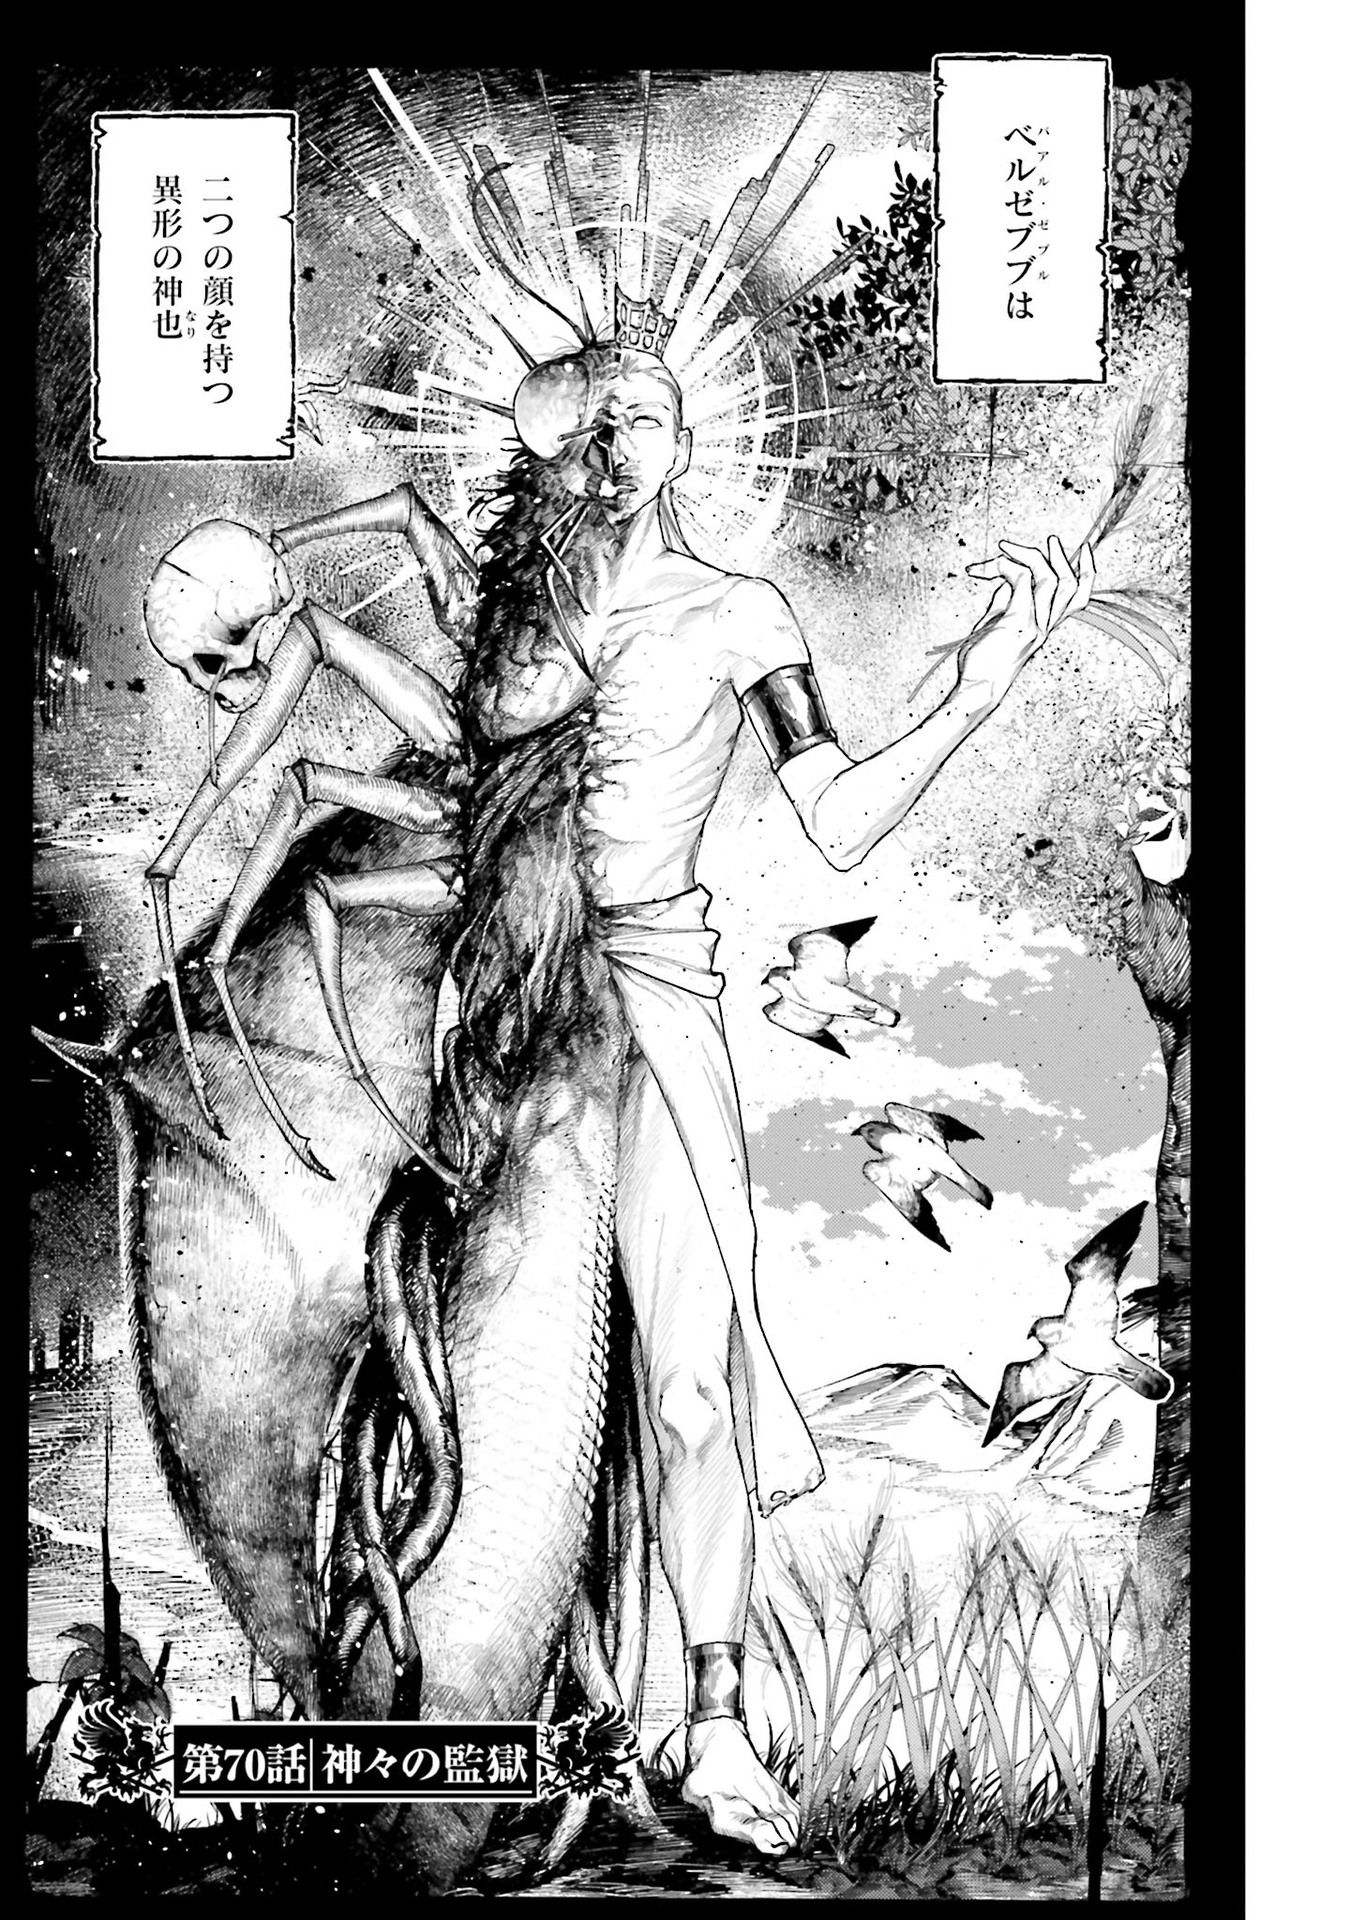 DISC] Shuumatsu no Valkyrie - Chapter 26 : r/manga